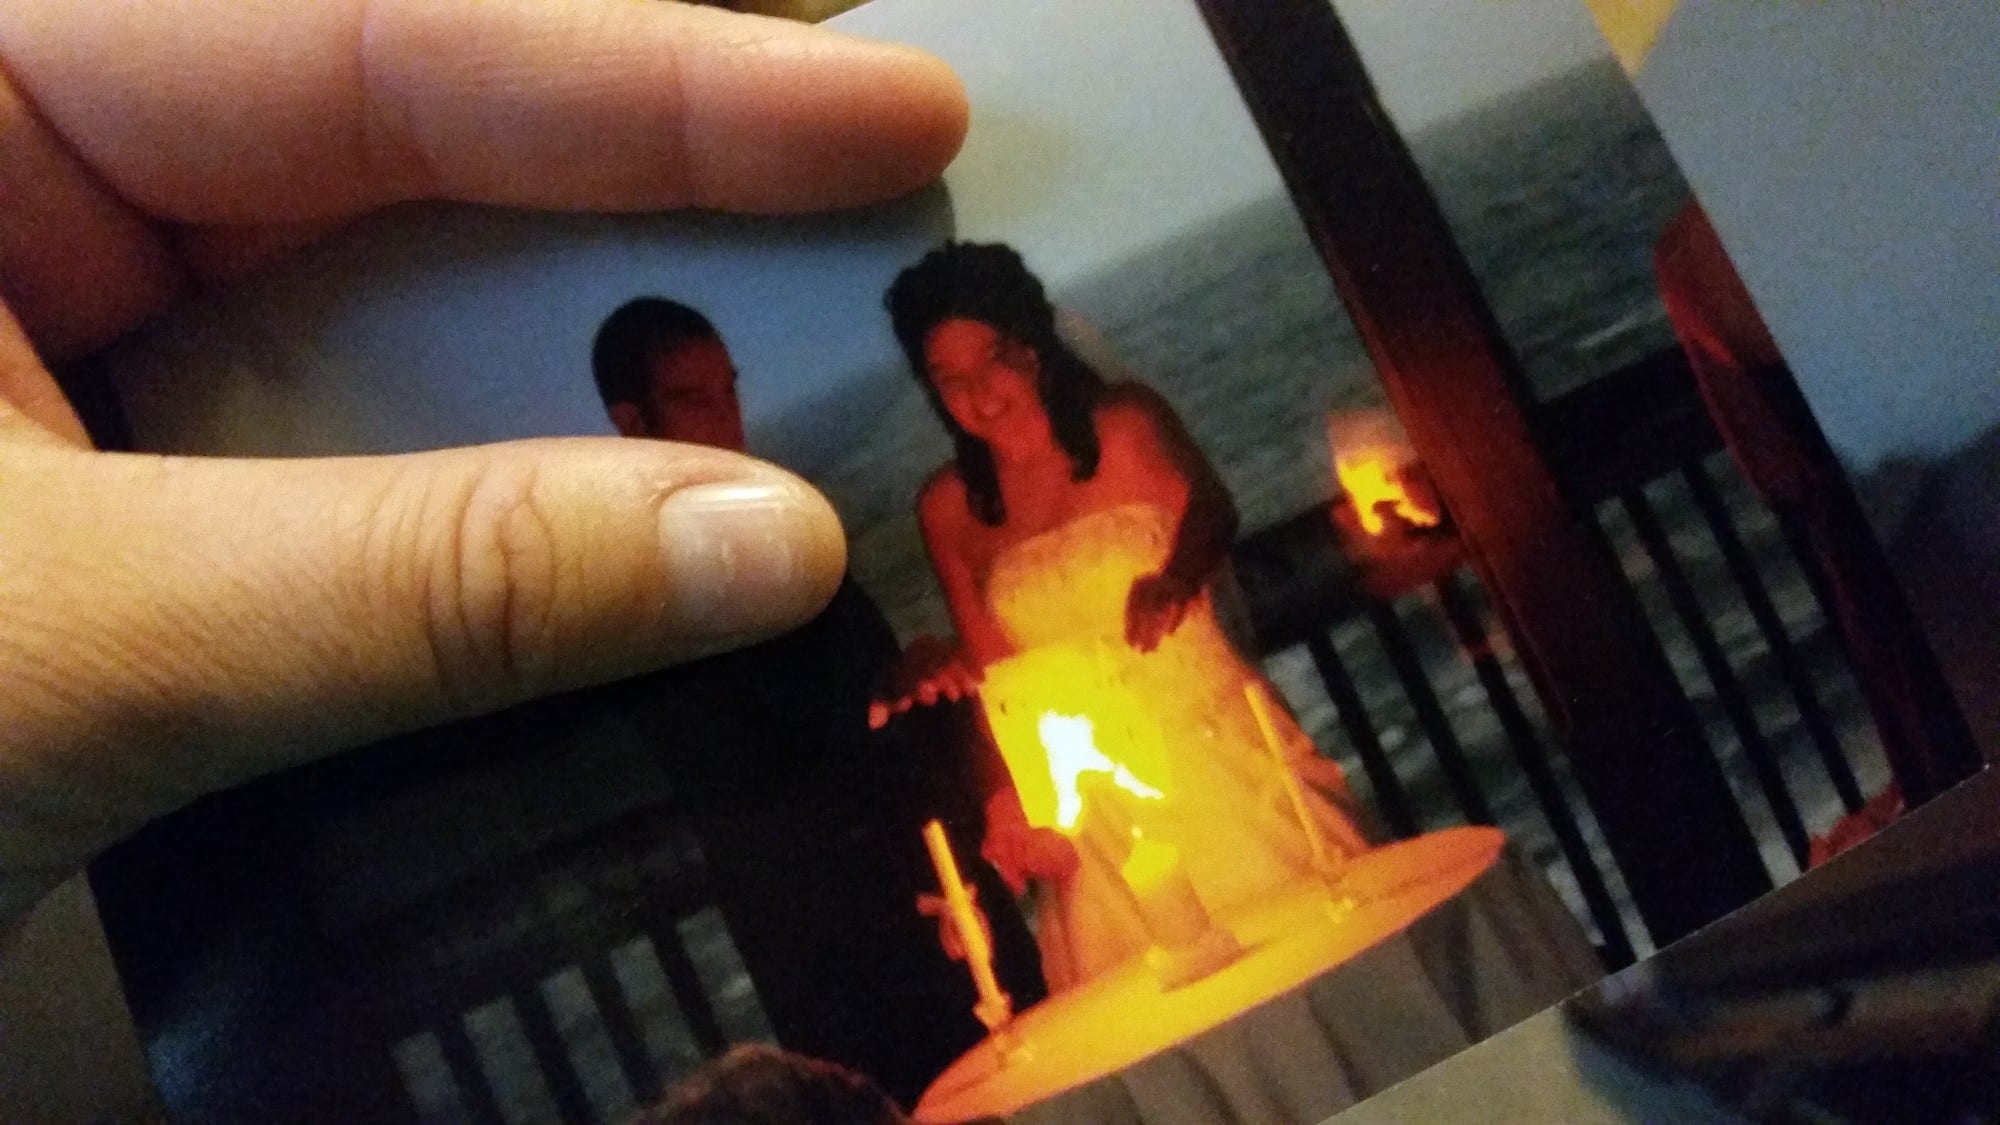 Flash Paper burning certificate of divorce